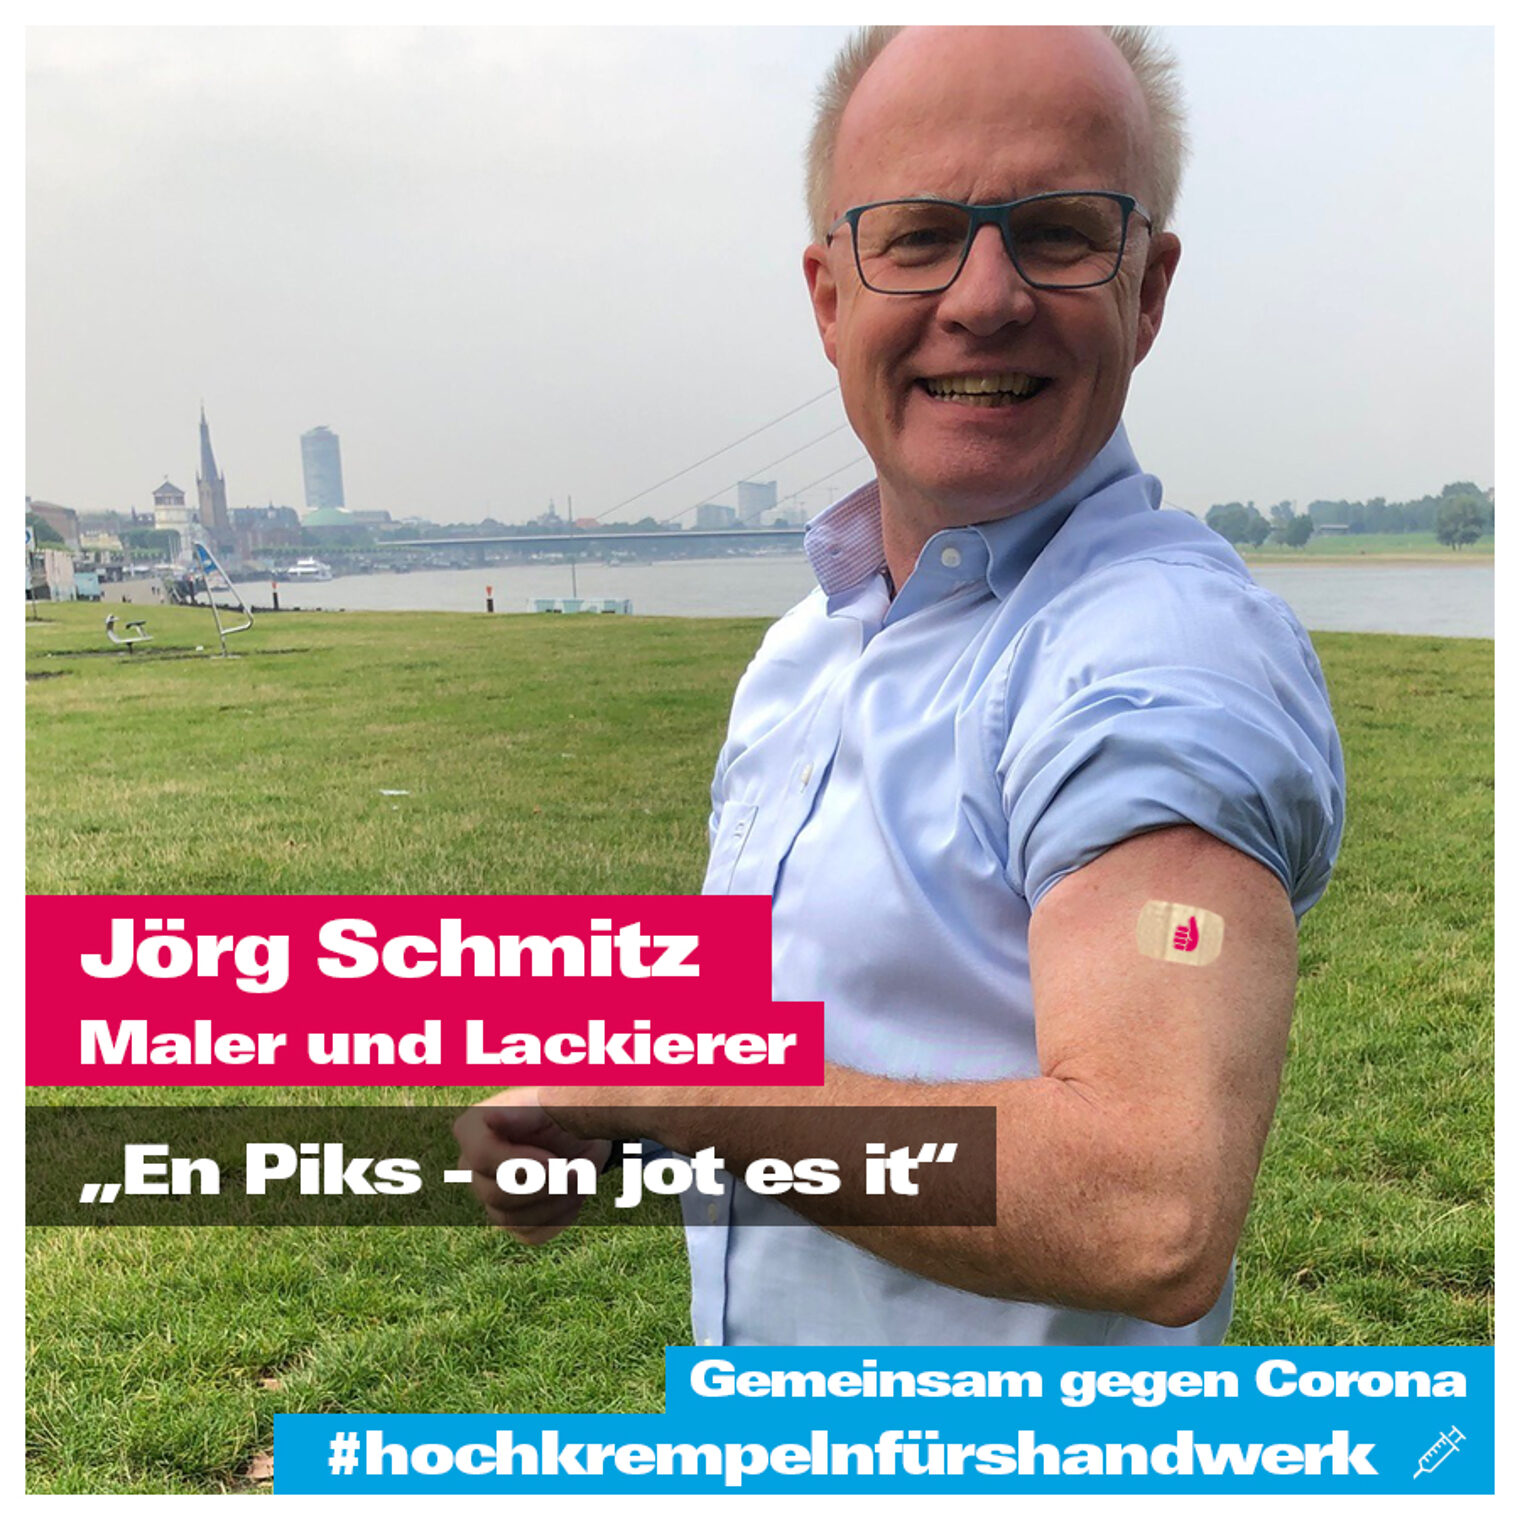 Jörg Schmitz hat sich gegen Corona impfen lassen.